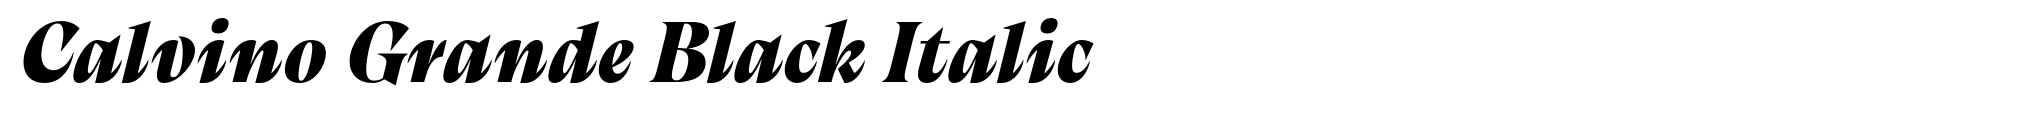 Calvino Grande Black Italic image